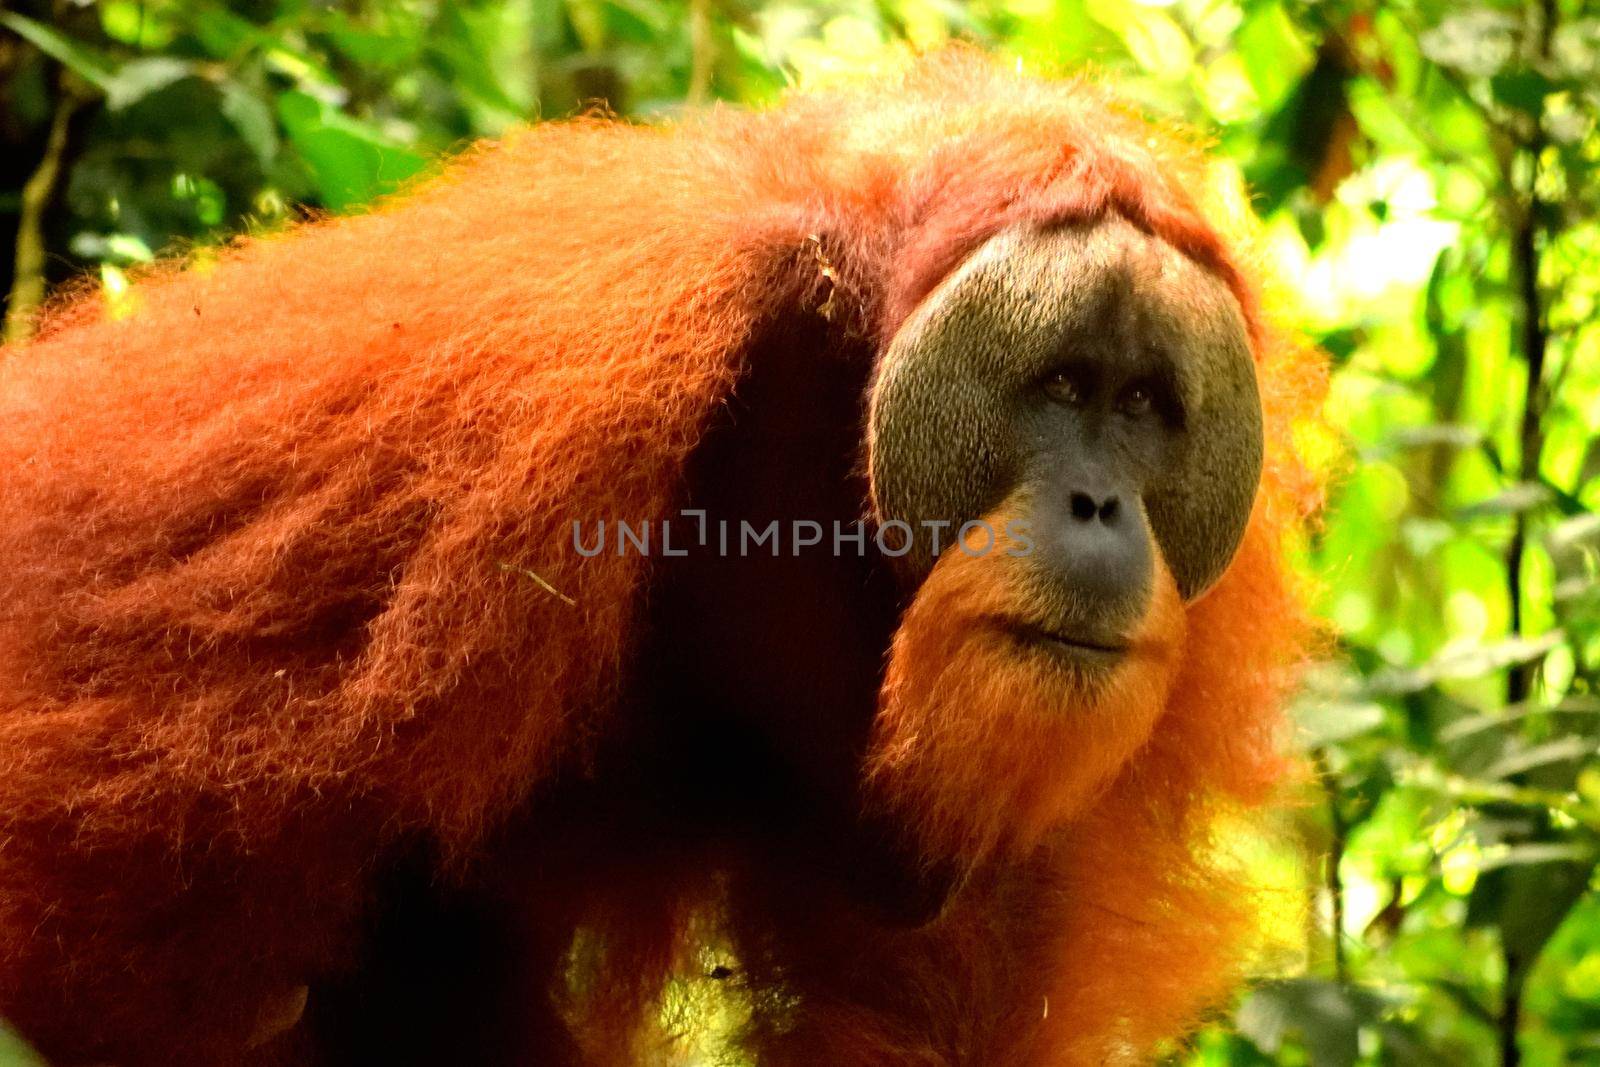 Sumatran orangutan male in the Gunung Leuser National Park by silentstock639